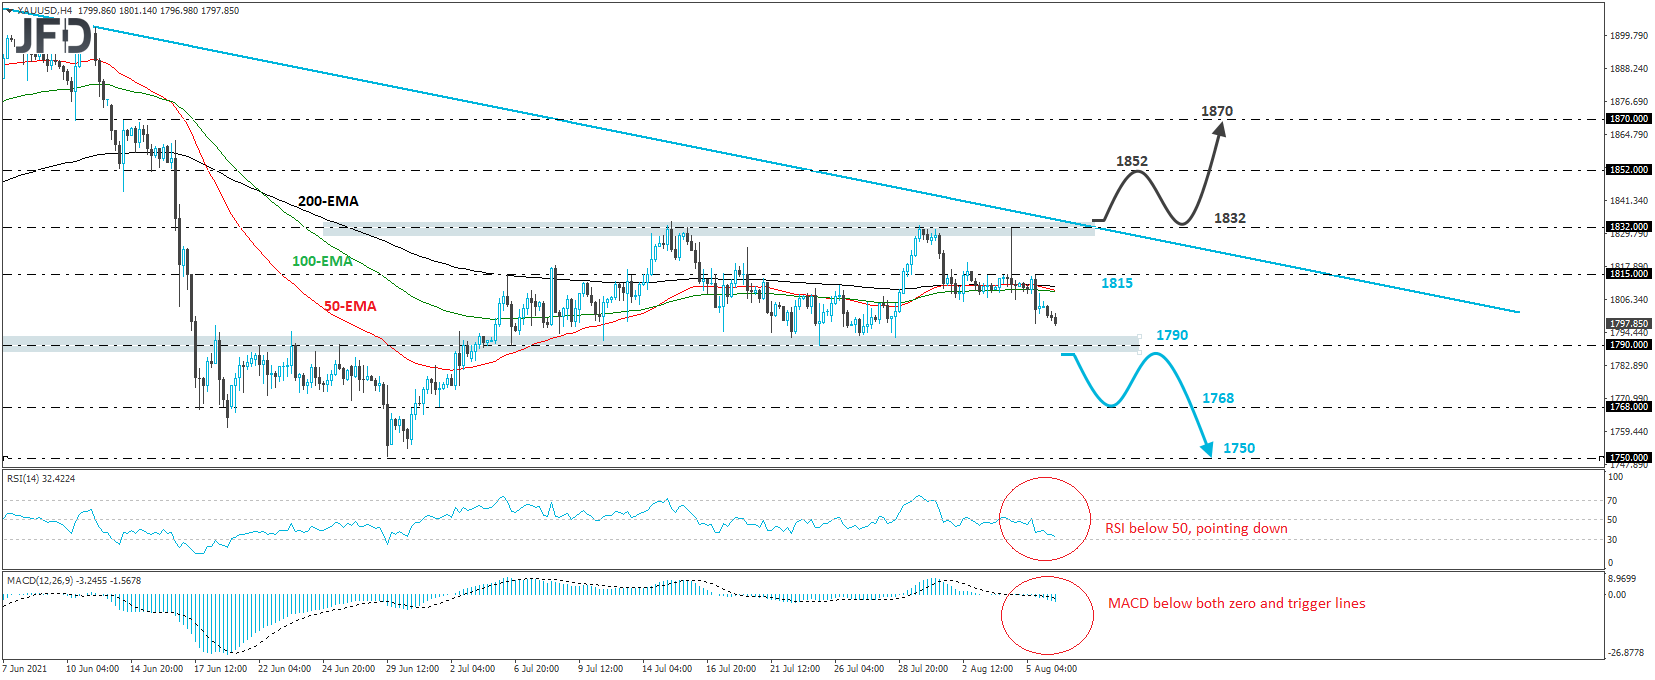 XAU/USD Gold 4-hour chart technical analysis